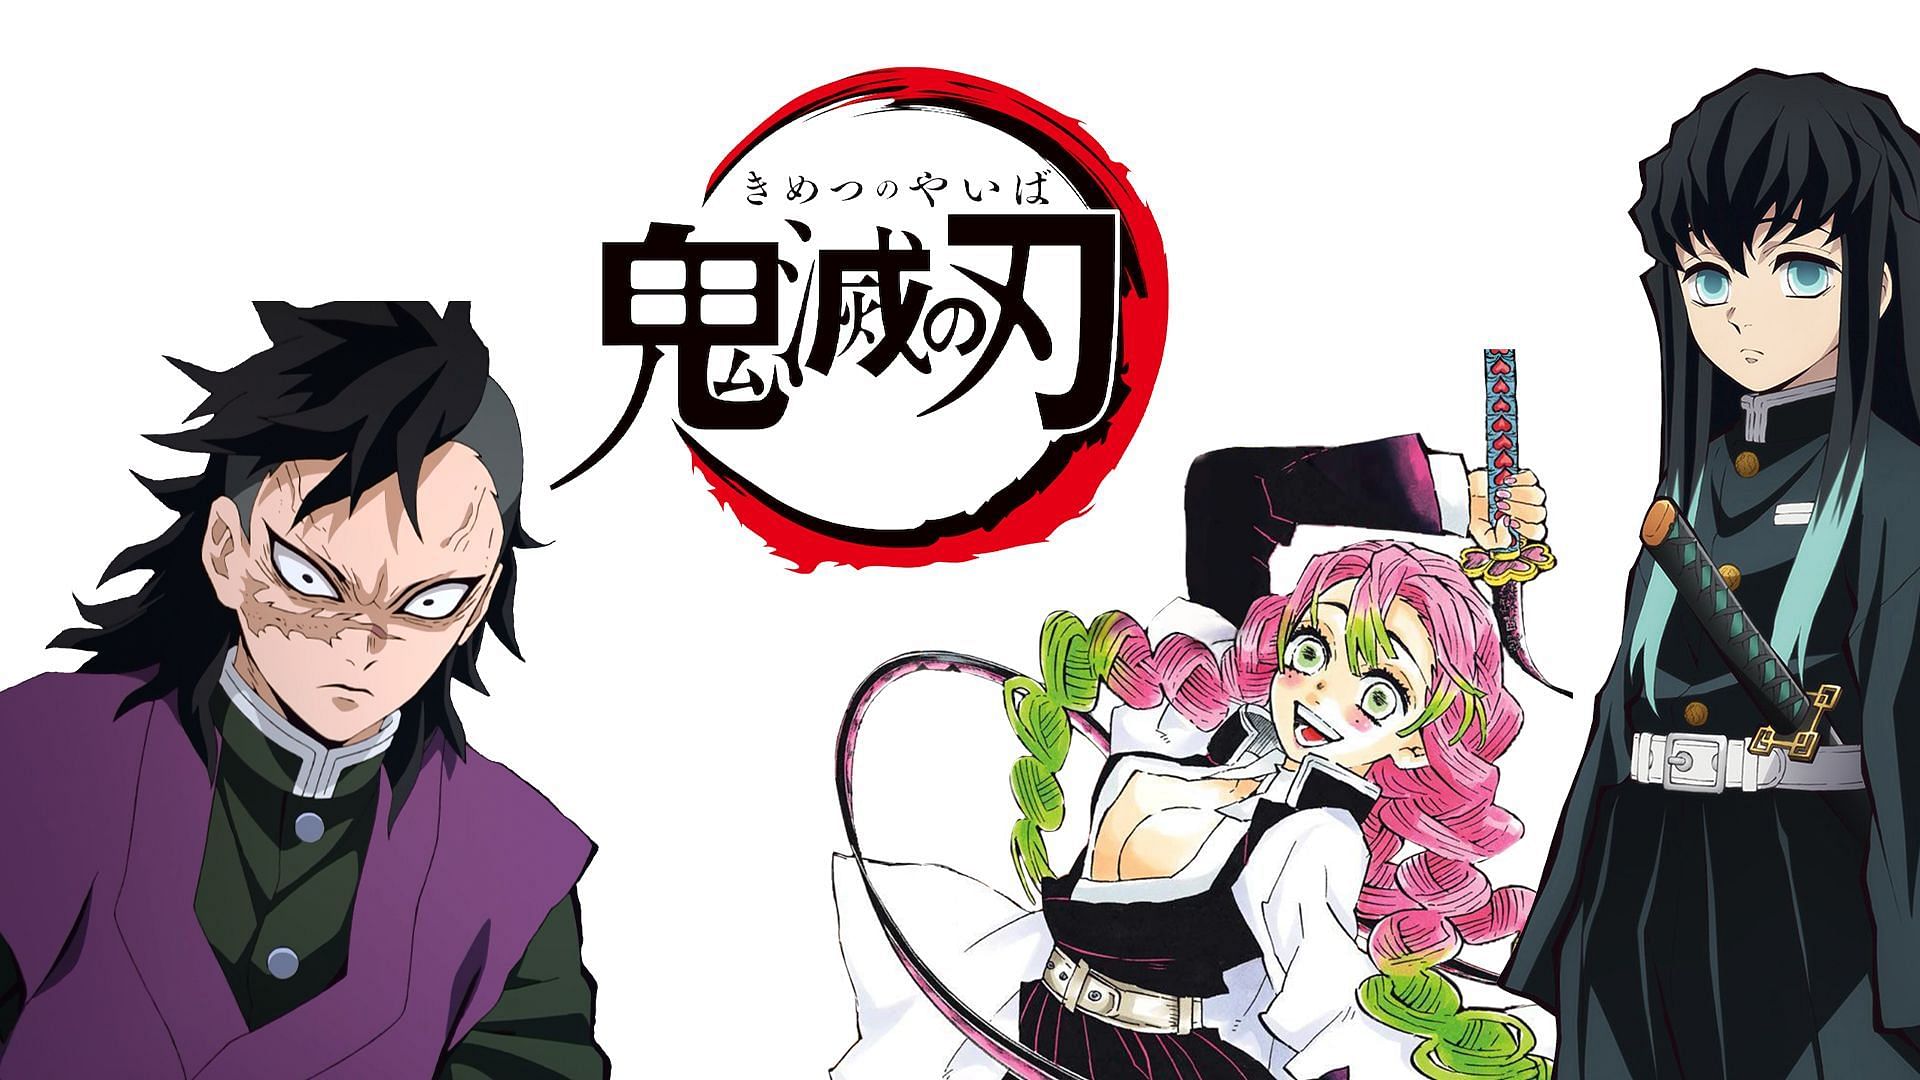 The next arc features Genya, Muichiro, and Mitsuri Prominently (Image via Sportskeeda)